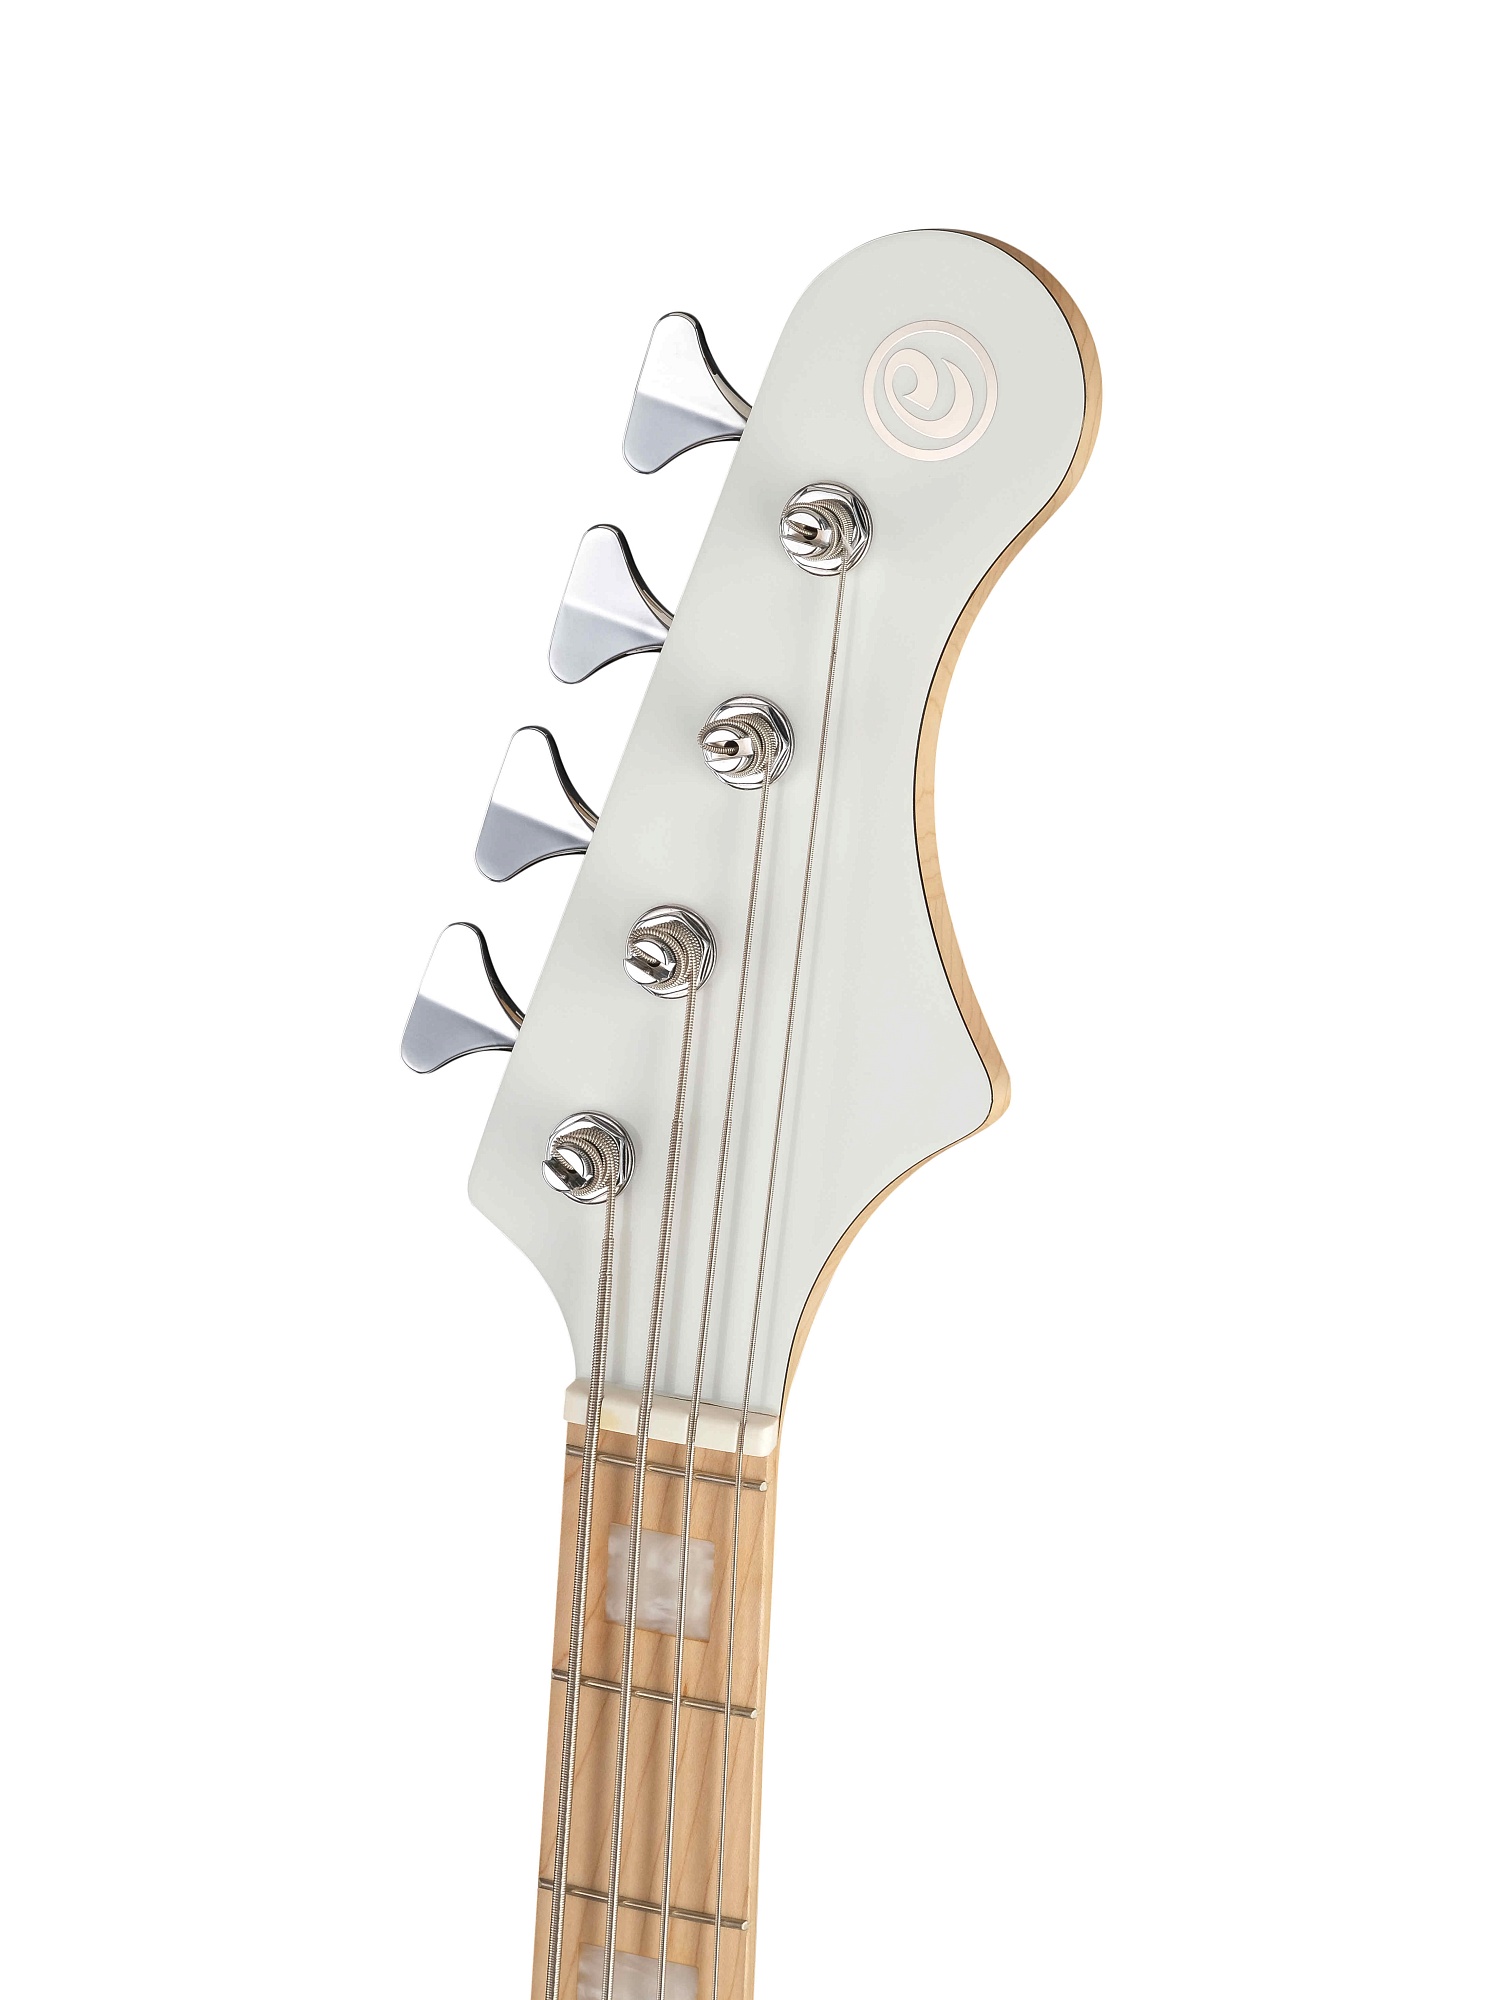 NJS4-WHT Elrick NJS Series Бас-гитара, белая, с чехлом, Cort купить в prostore.me